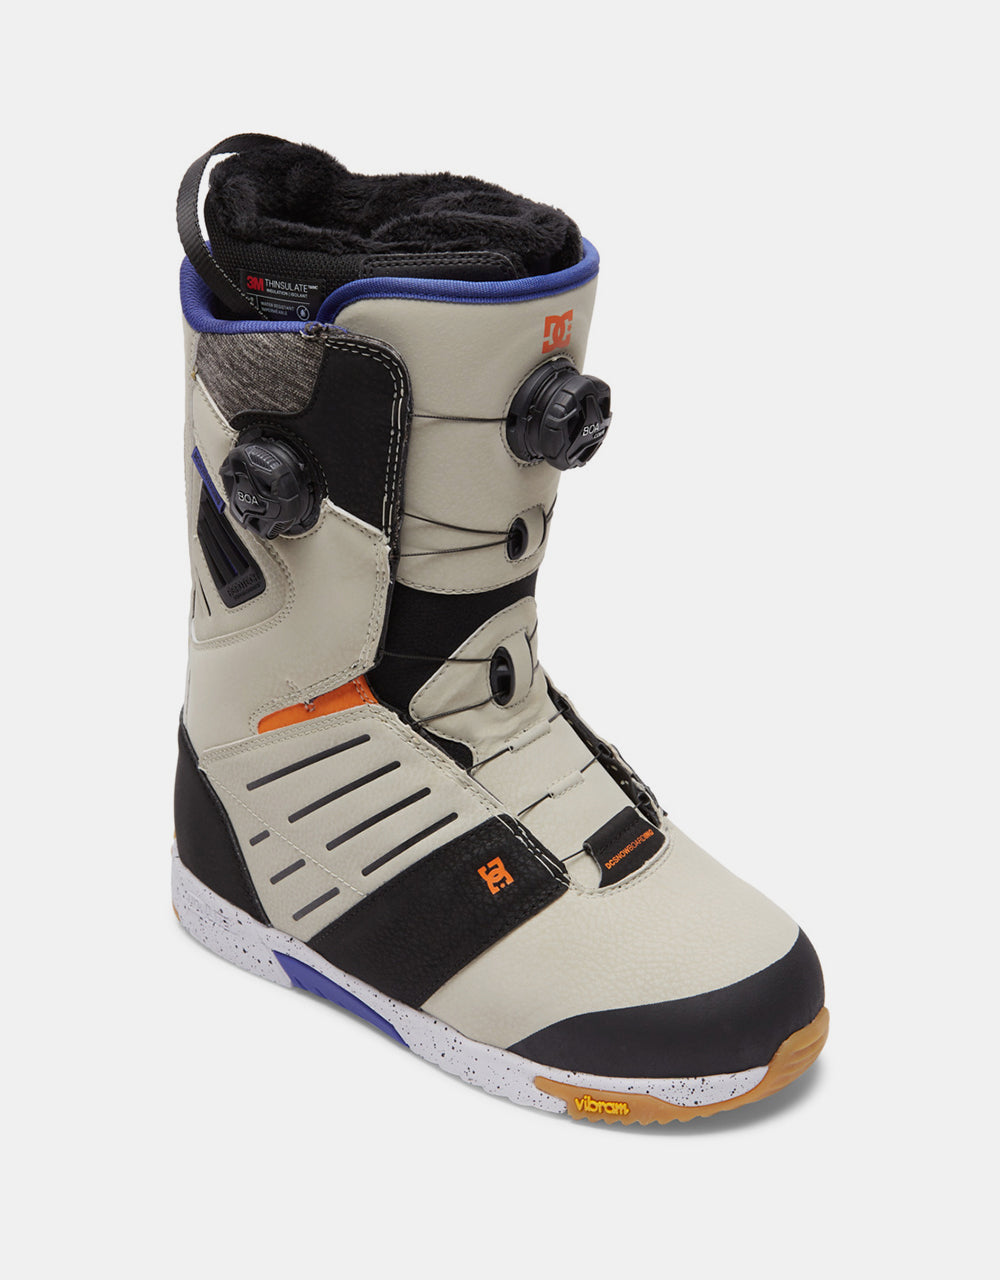 DC Judge 2023 Snowboard Boots - Black/Tan